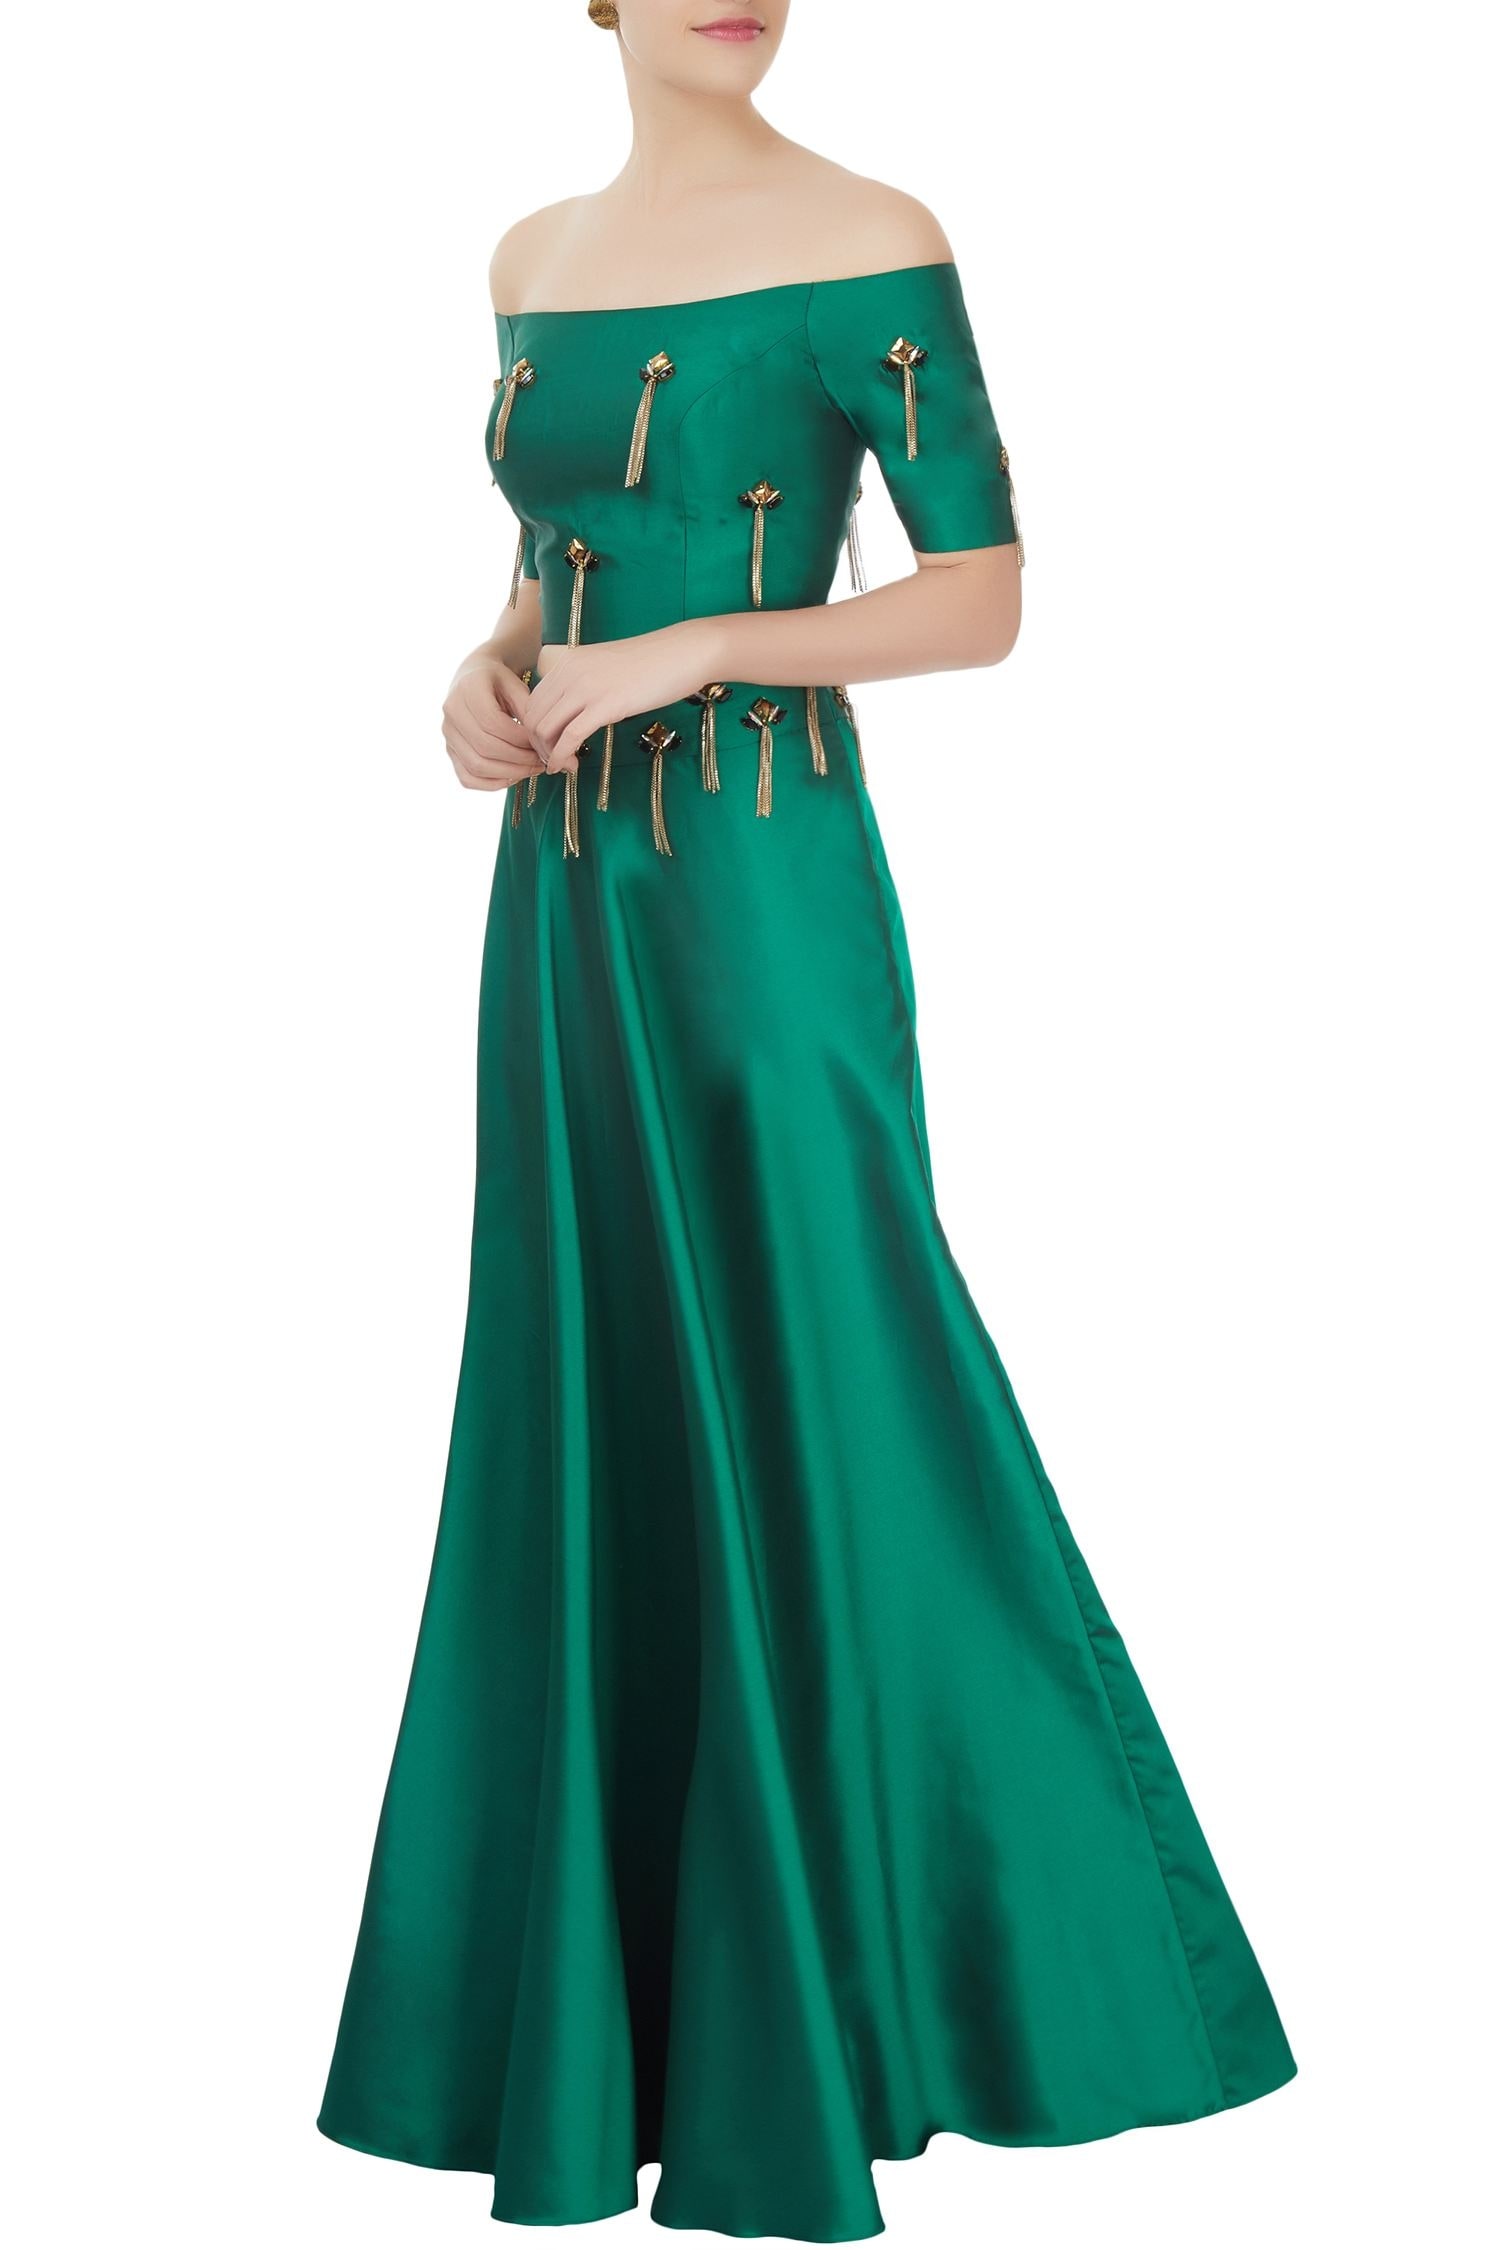 Buy Emerald green off-shoulder top & skirt set with tassels by Kresha ...